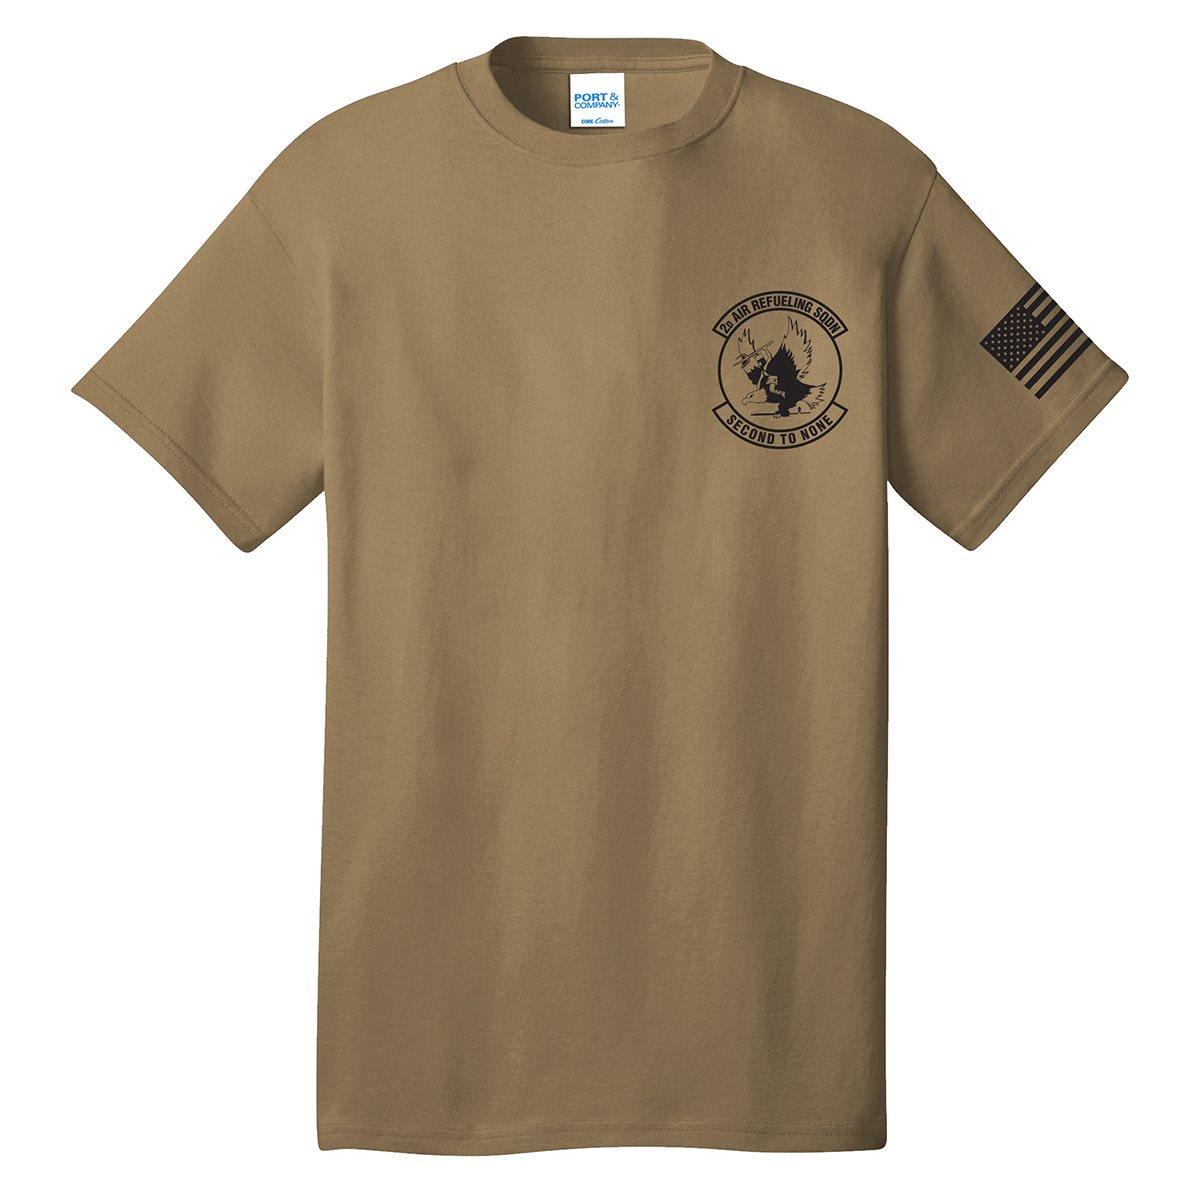 2 ARS PC54 Coyote Brown Shirt.jpg?quality=85